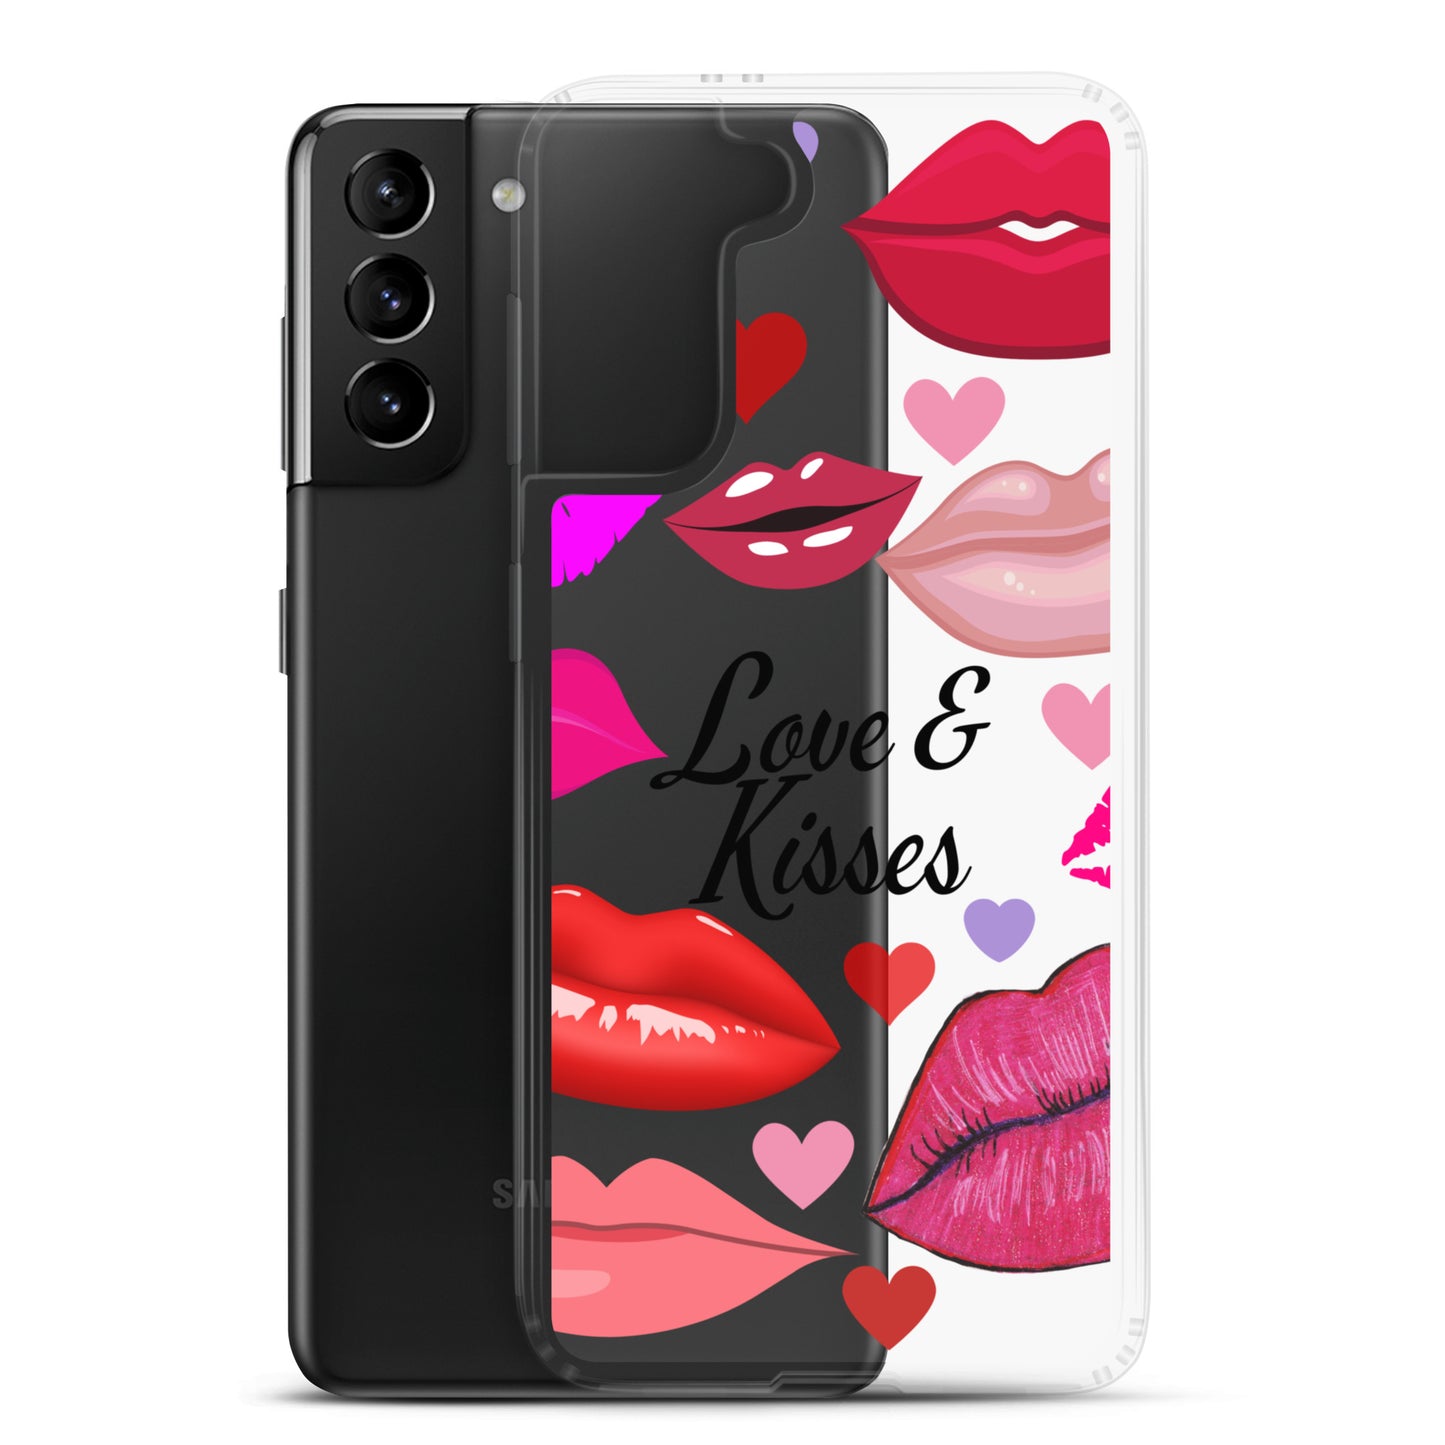 Samsung Love & Kisses Phone Case